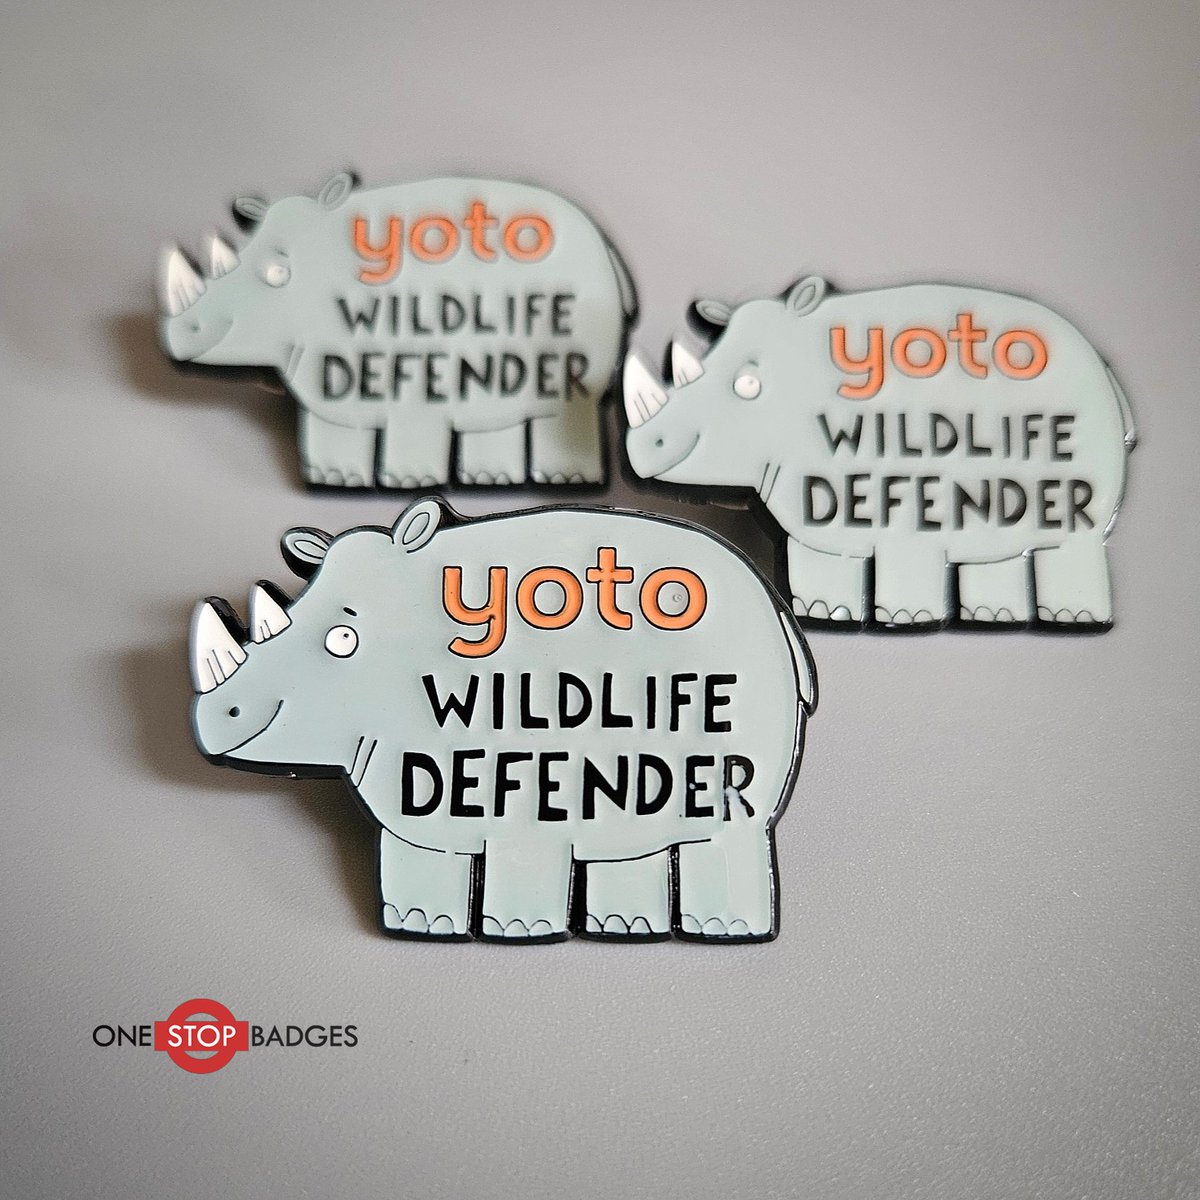 ❤️ These little rhinos #softenamelbadges #pinbadges #pinspinspins #enamelbadges #badges #pins #custompins #personalisedpins #lapelpins #pincollector #enamelpins #rhino #wildlife